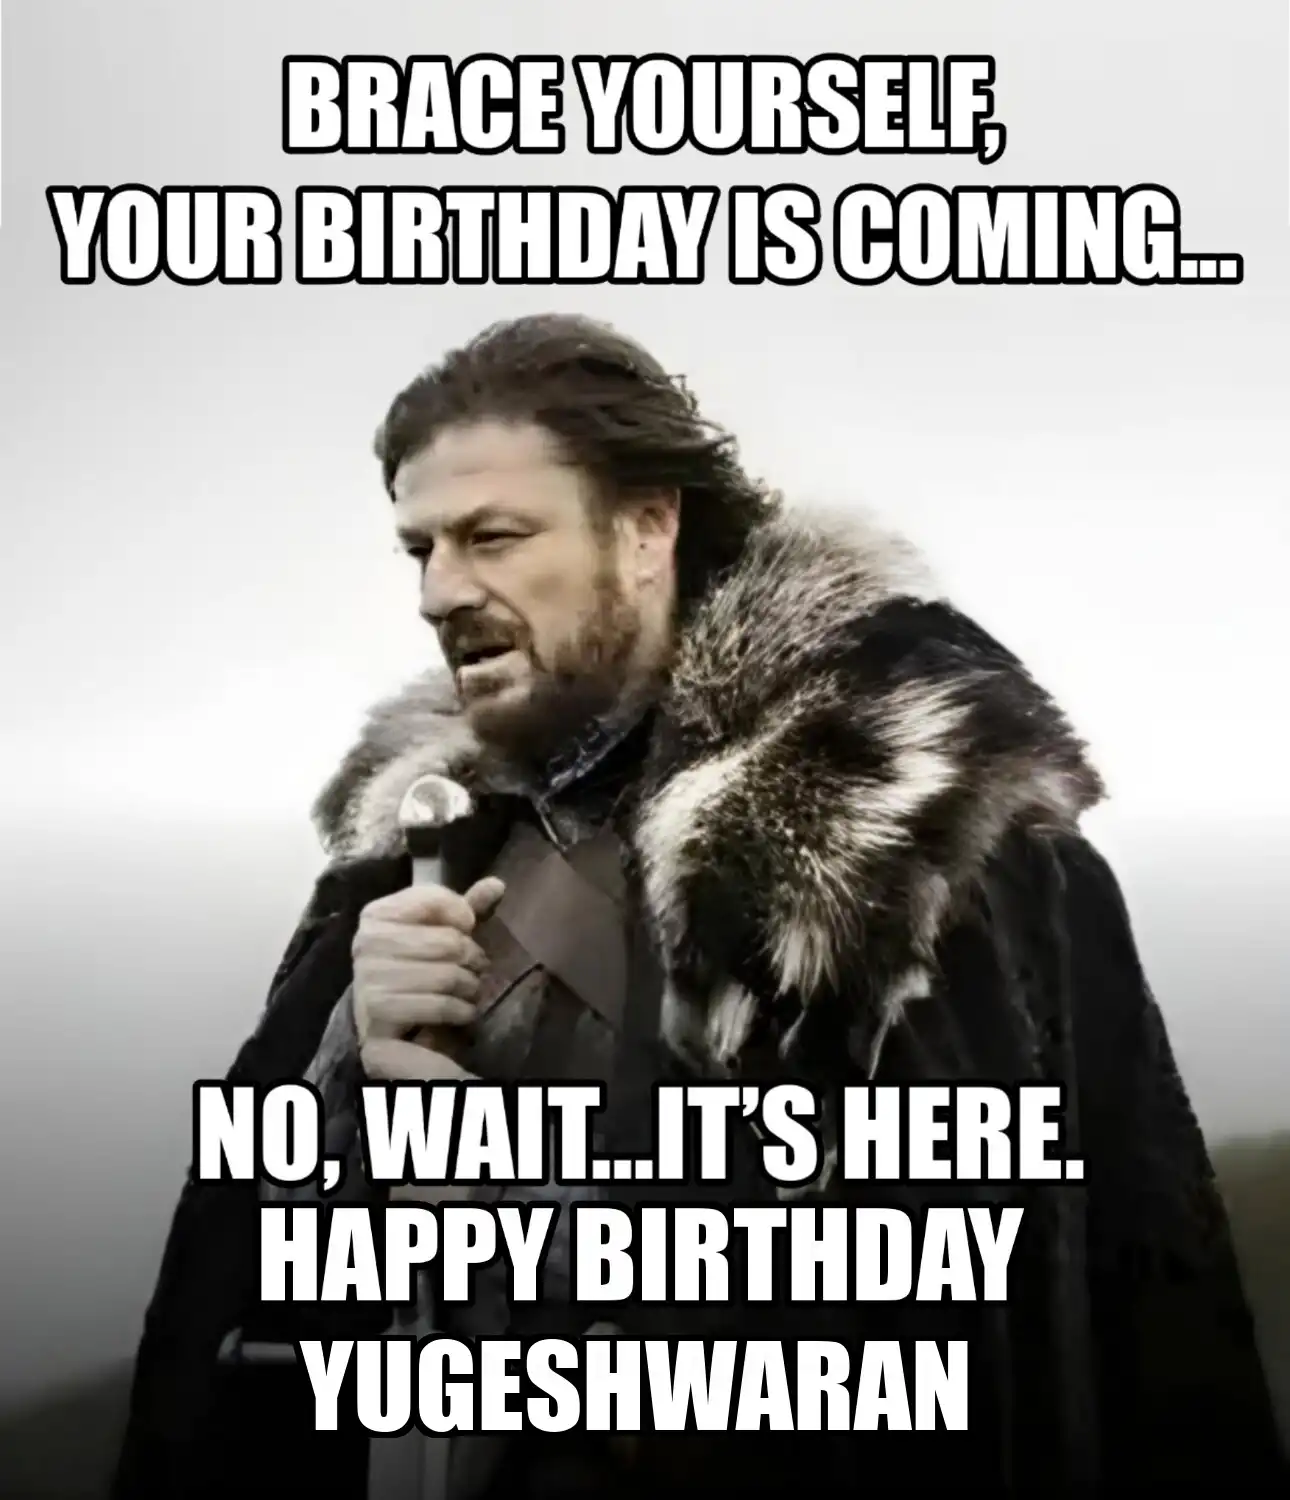 Happy Birthday Yugeshwaran Brace Yourself Your Birthday Is Coming Meme